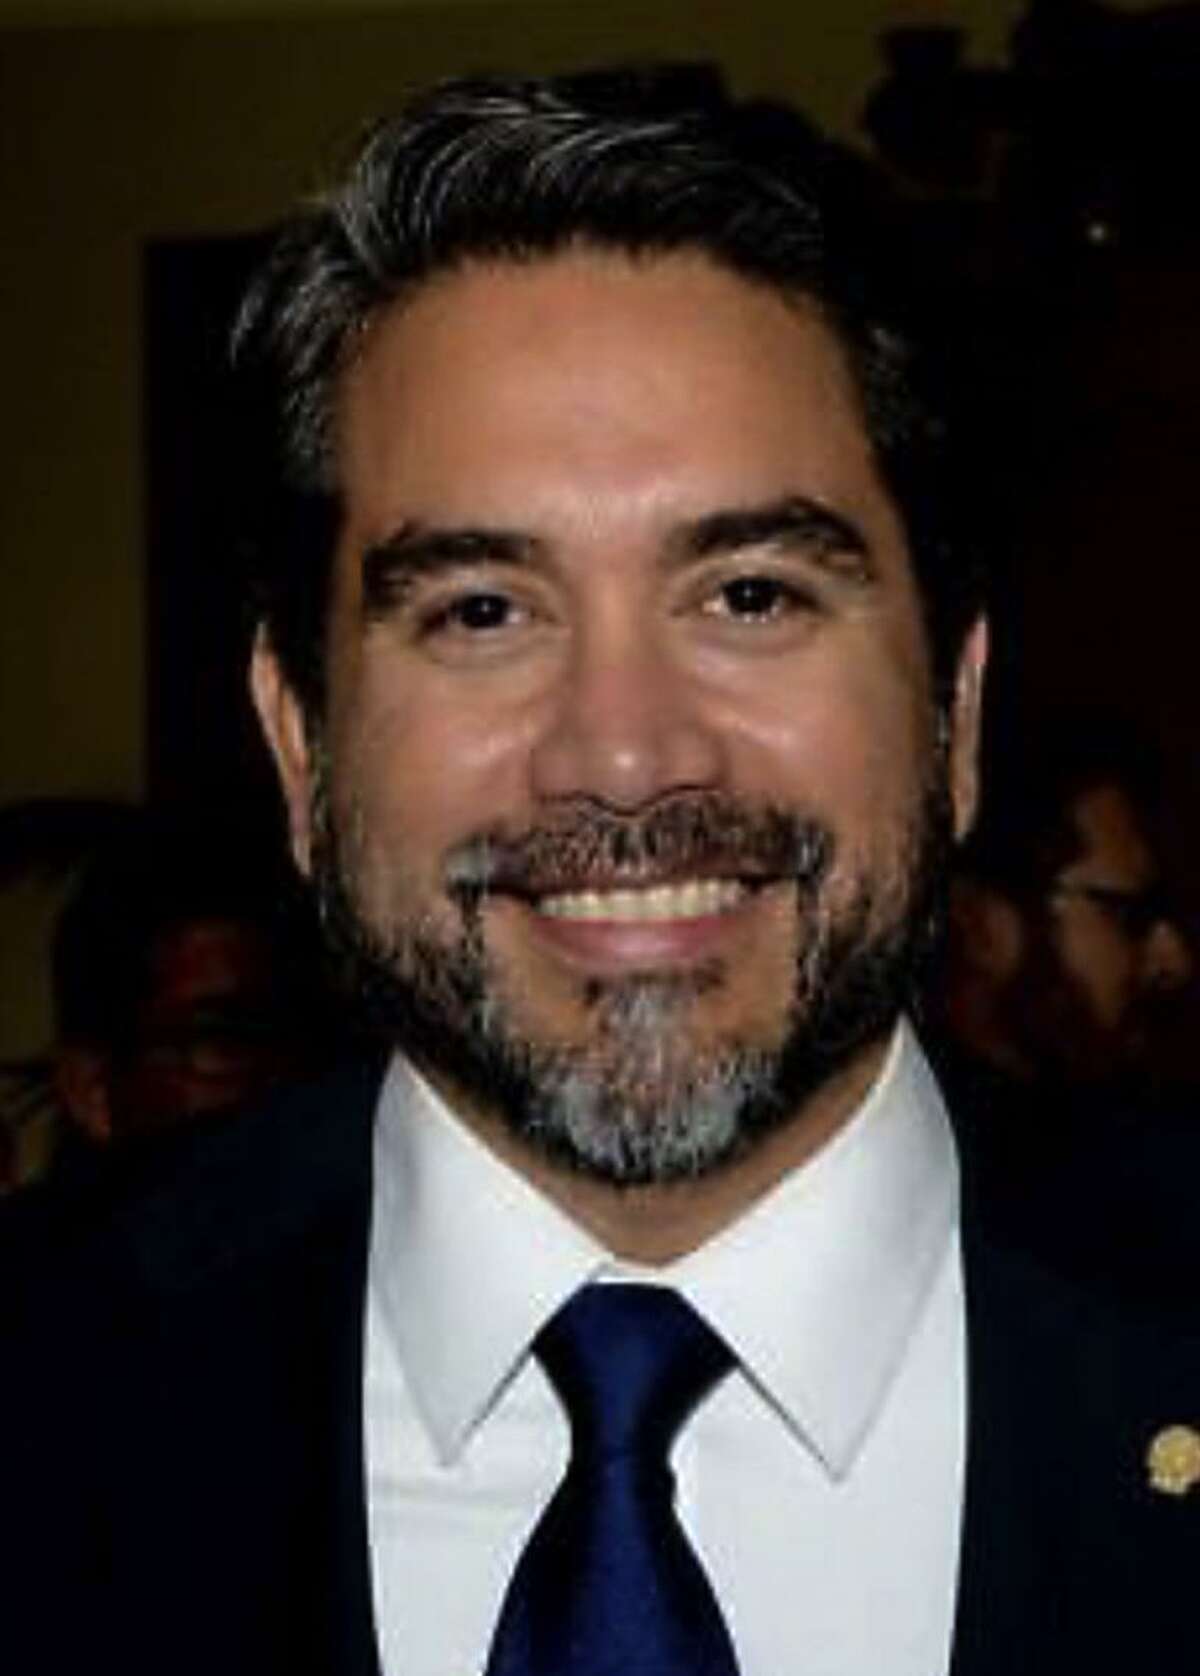 District 1 Candidate - Roberto Treviño. (Incumbent).